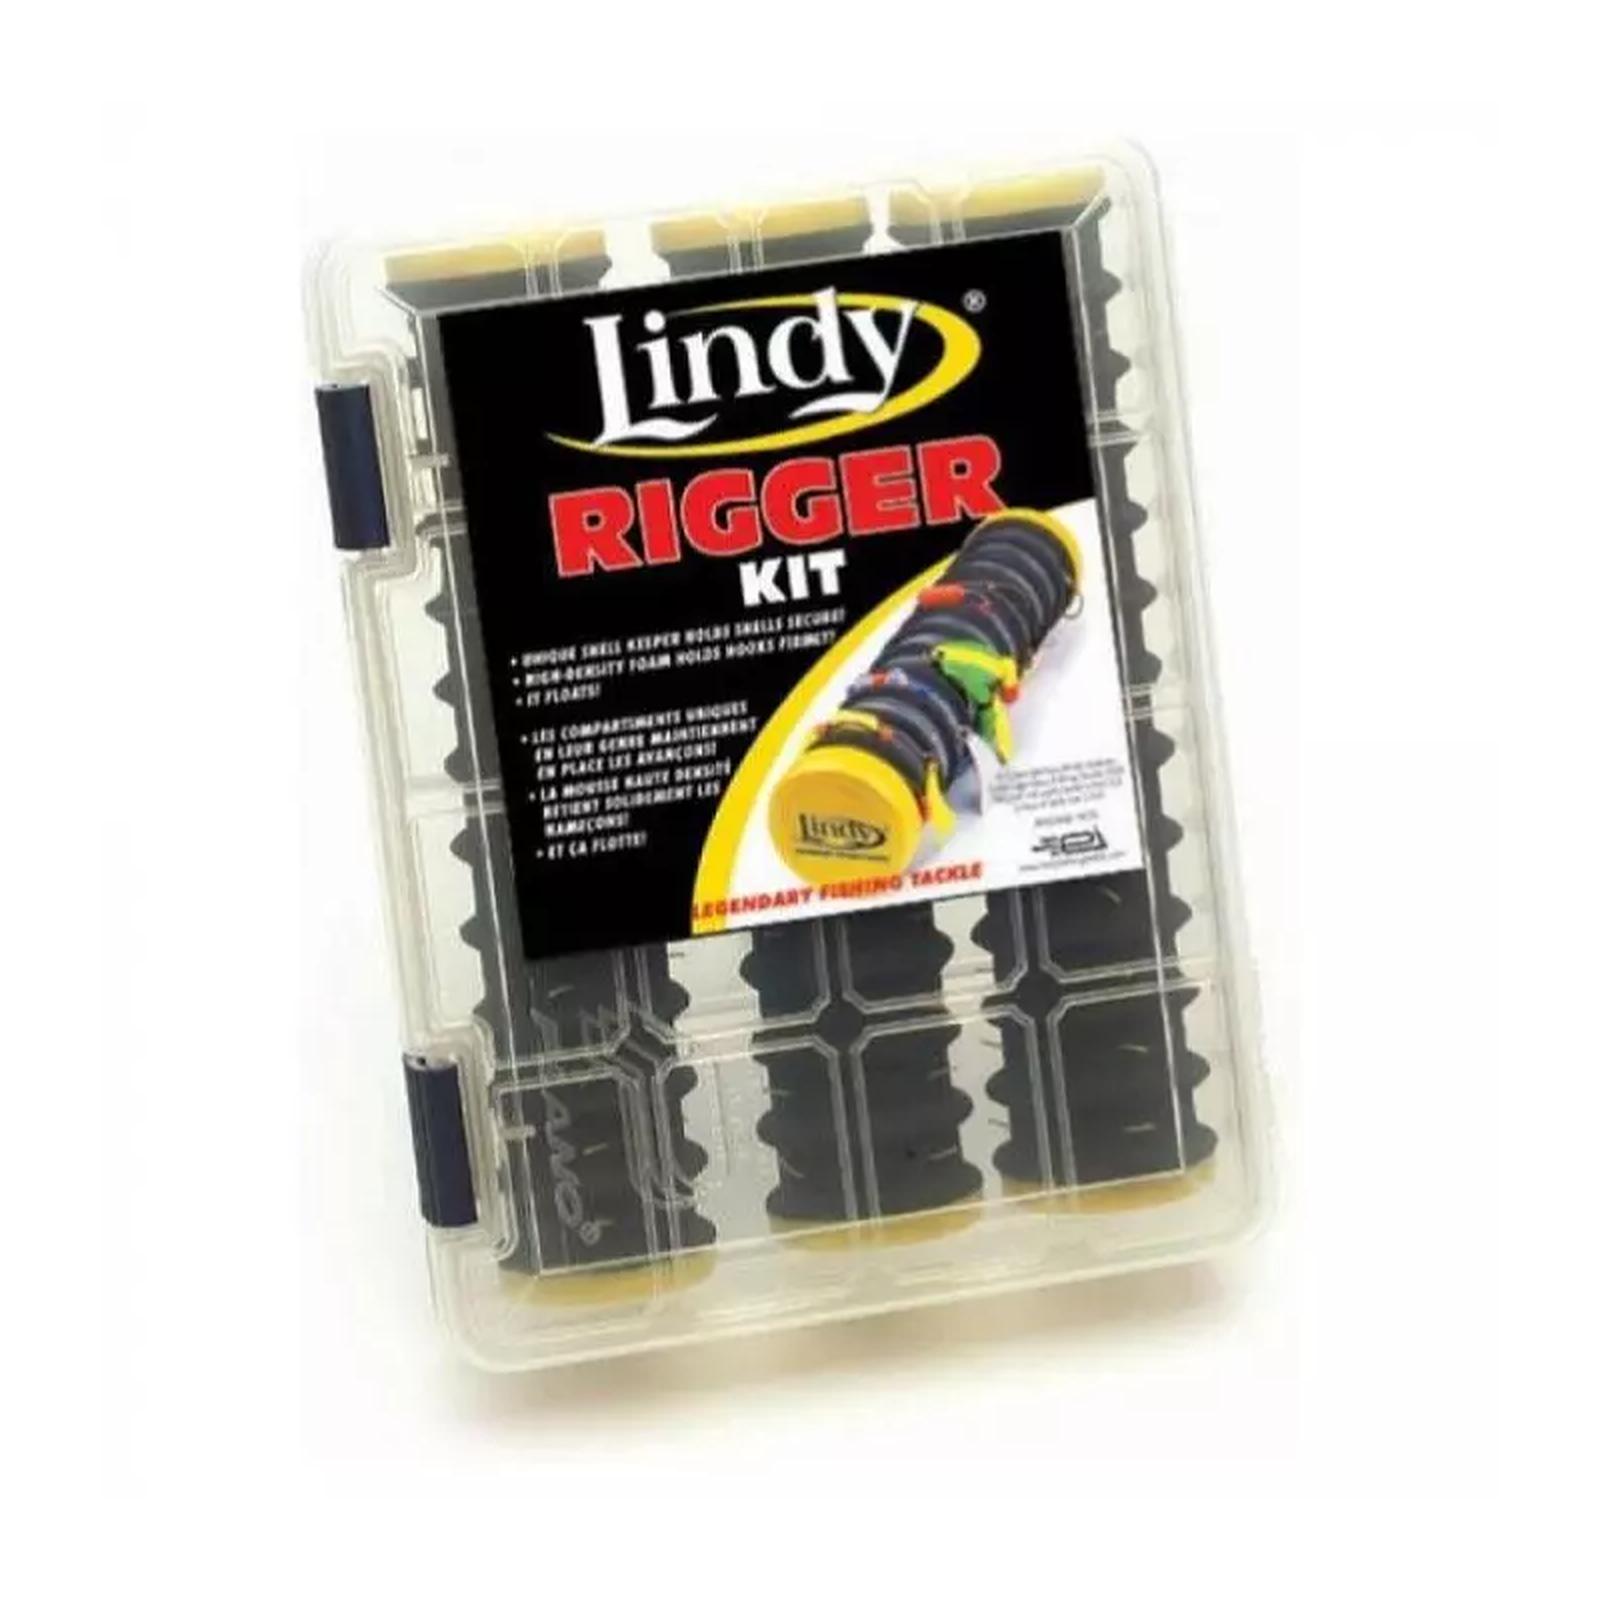 Lindy Original Rigger Kit